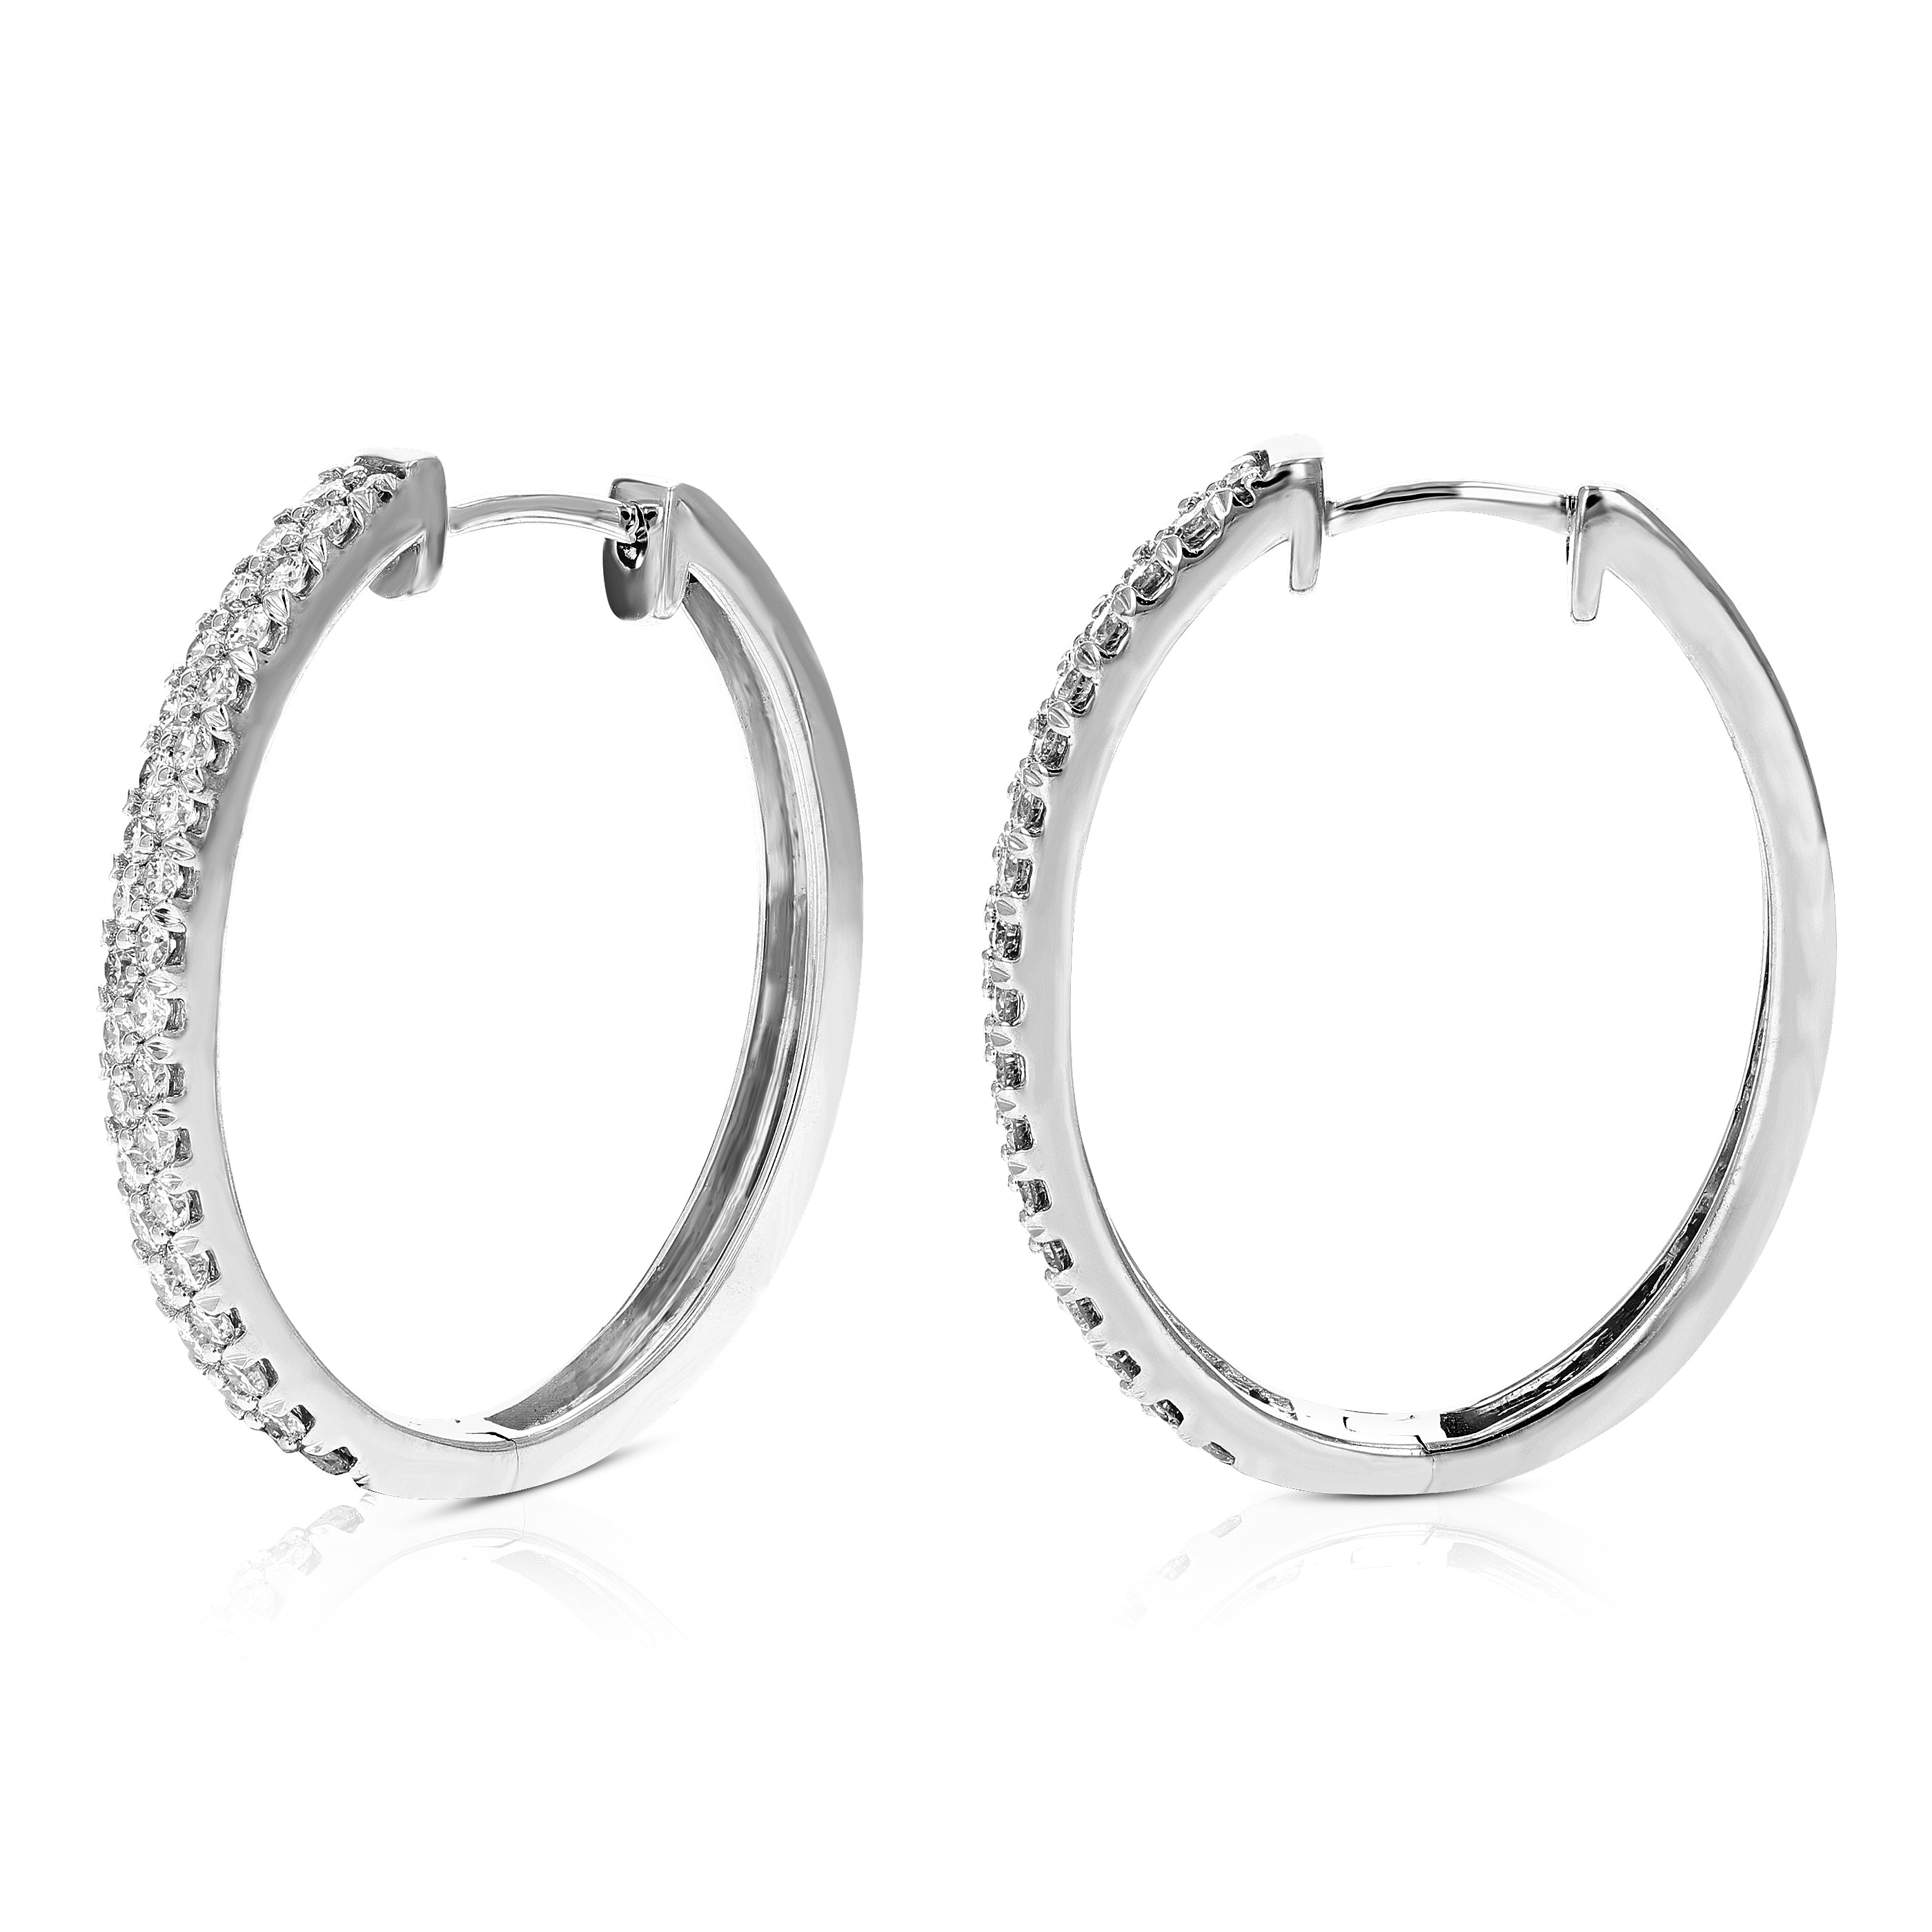 Double Row Pave Diamond Hoop Earrings